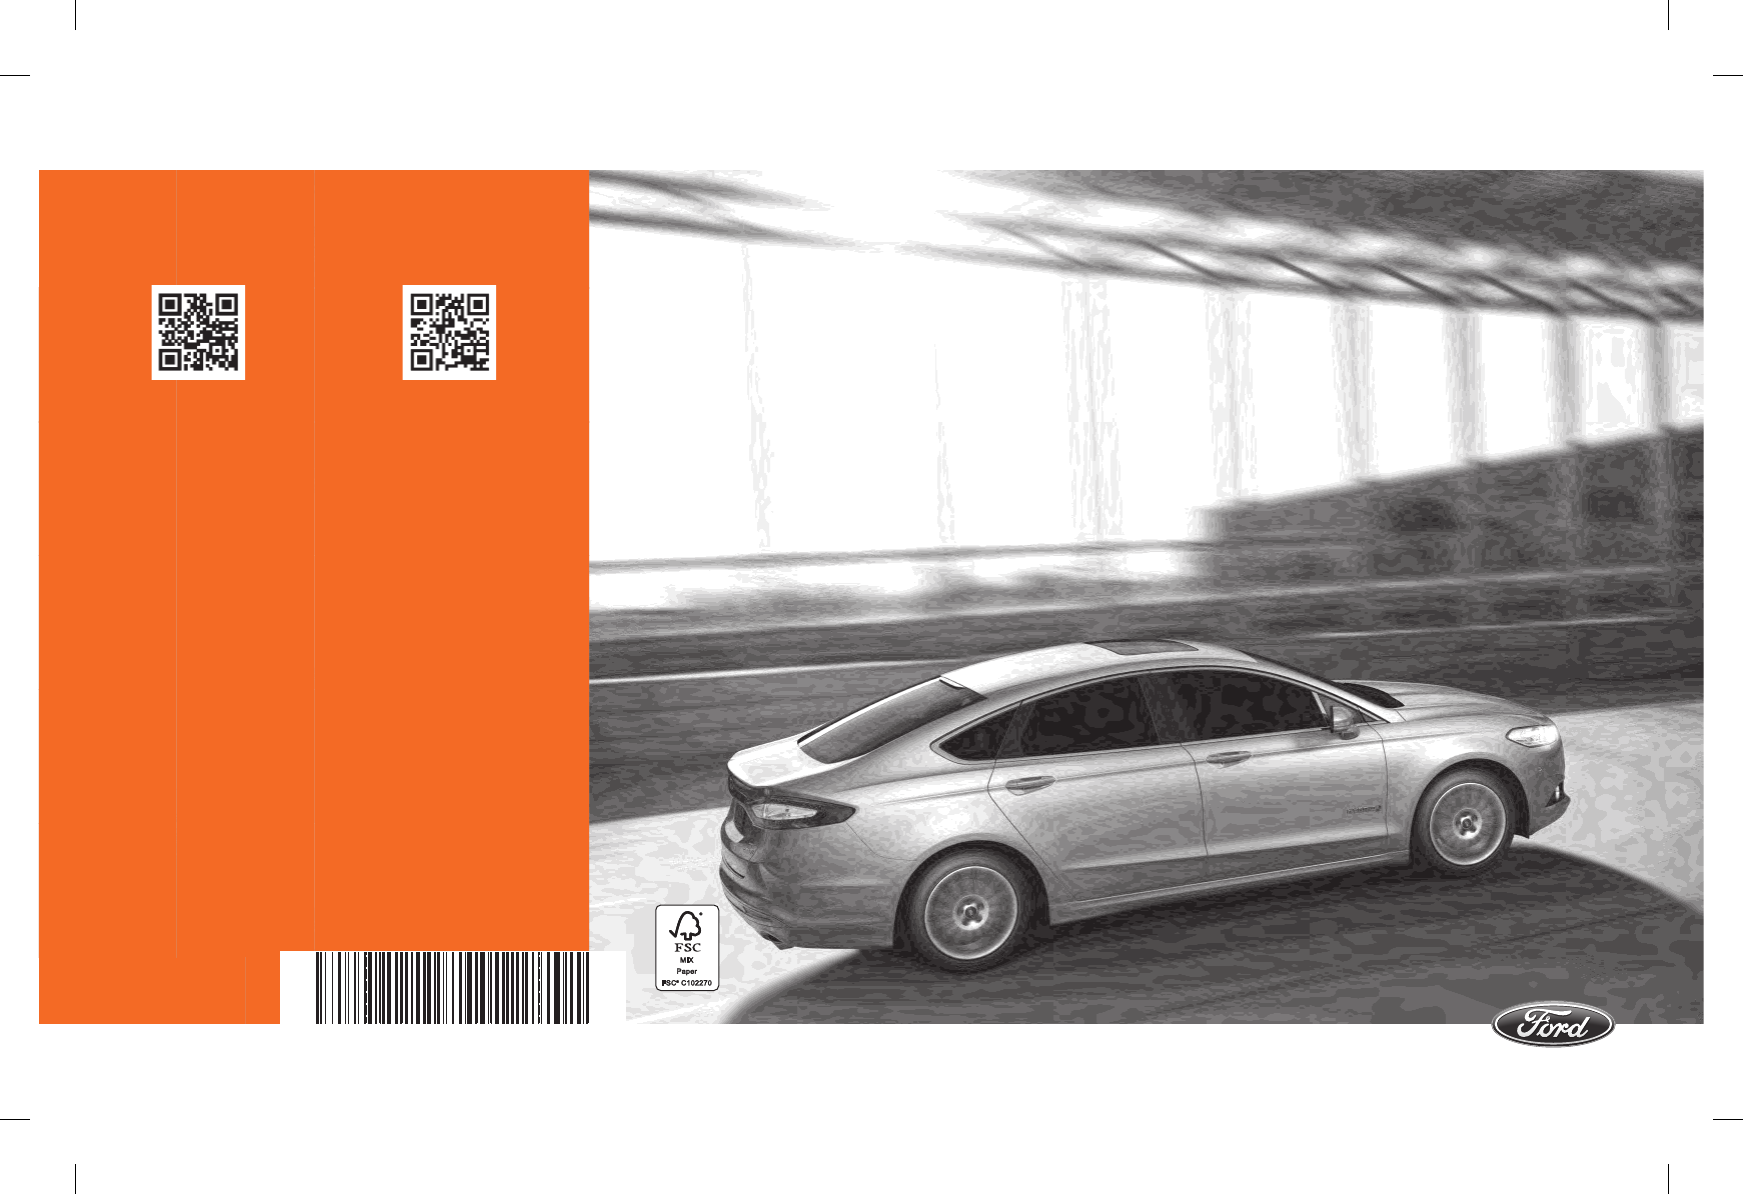 2015 ford fusion manual book